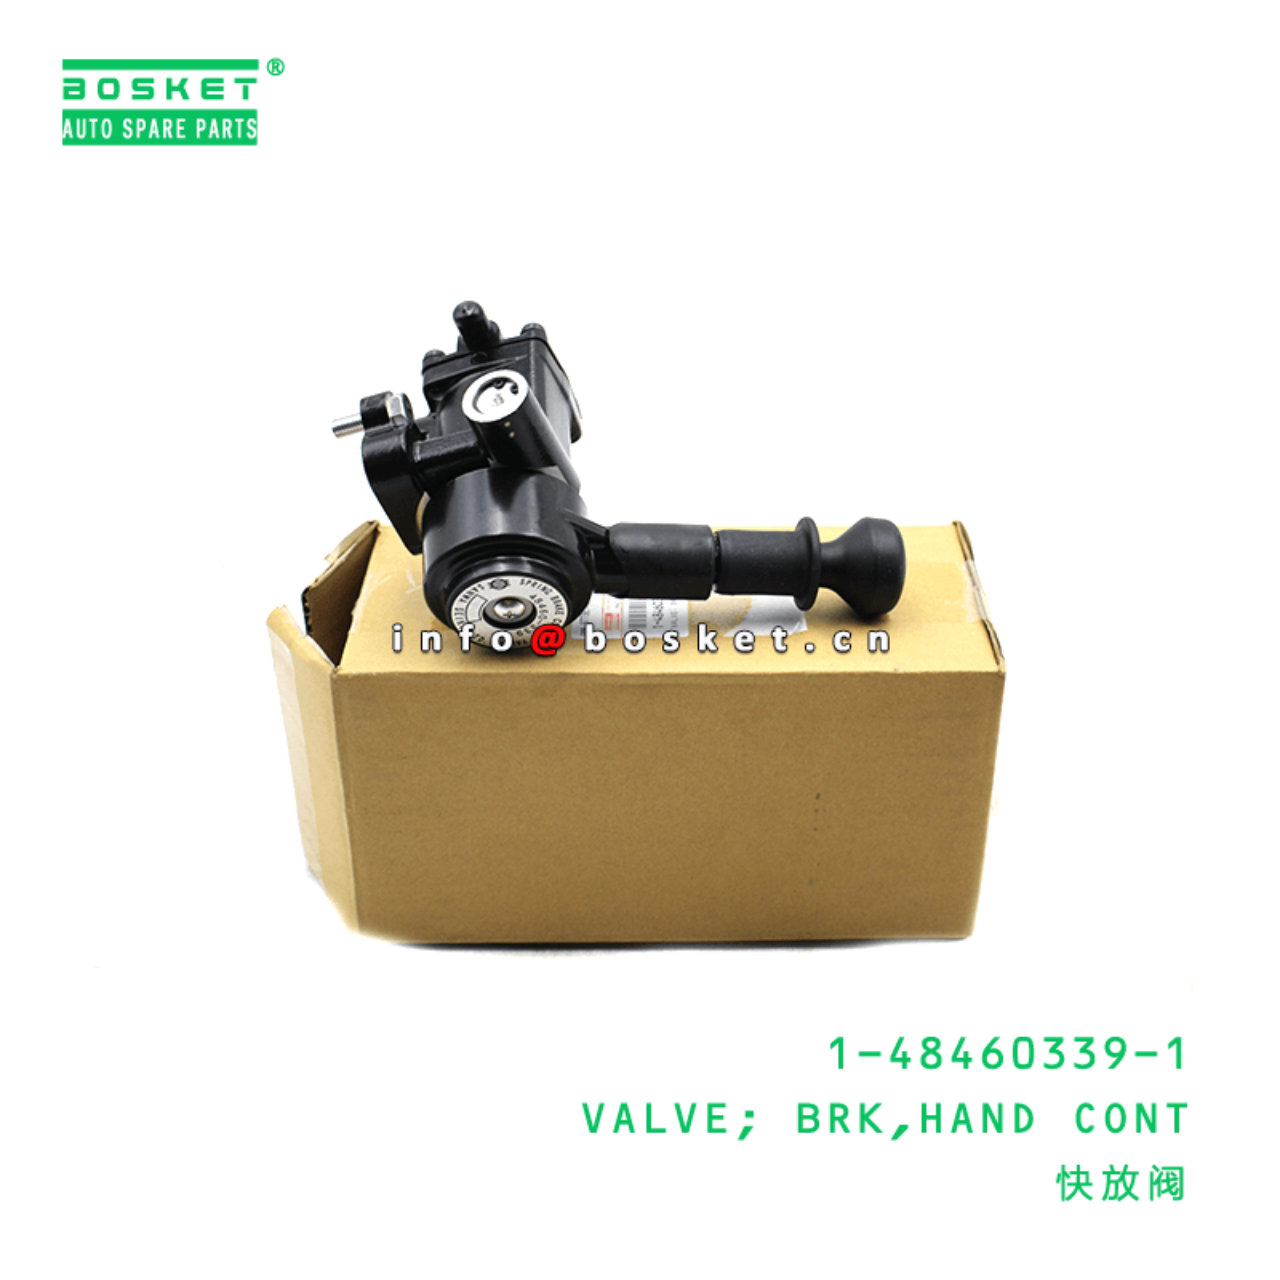 1-48460339-1 Hand Control Brake Valve 1484603391 Suitable for ISUZU CYZ